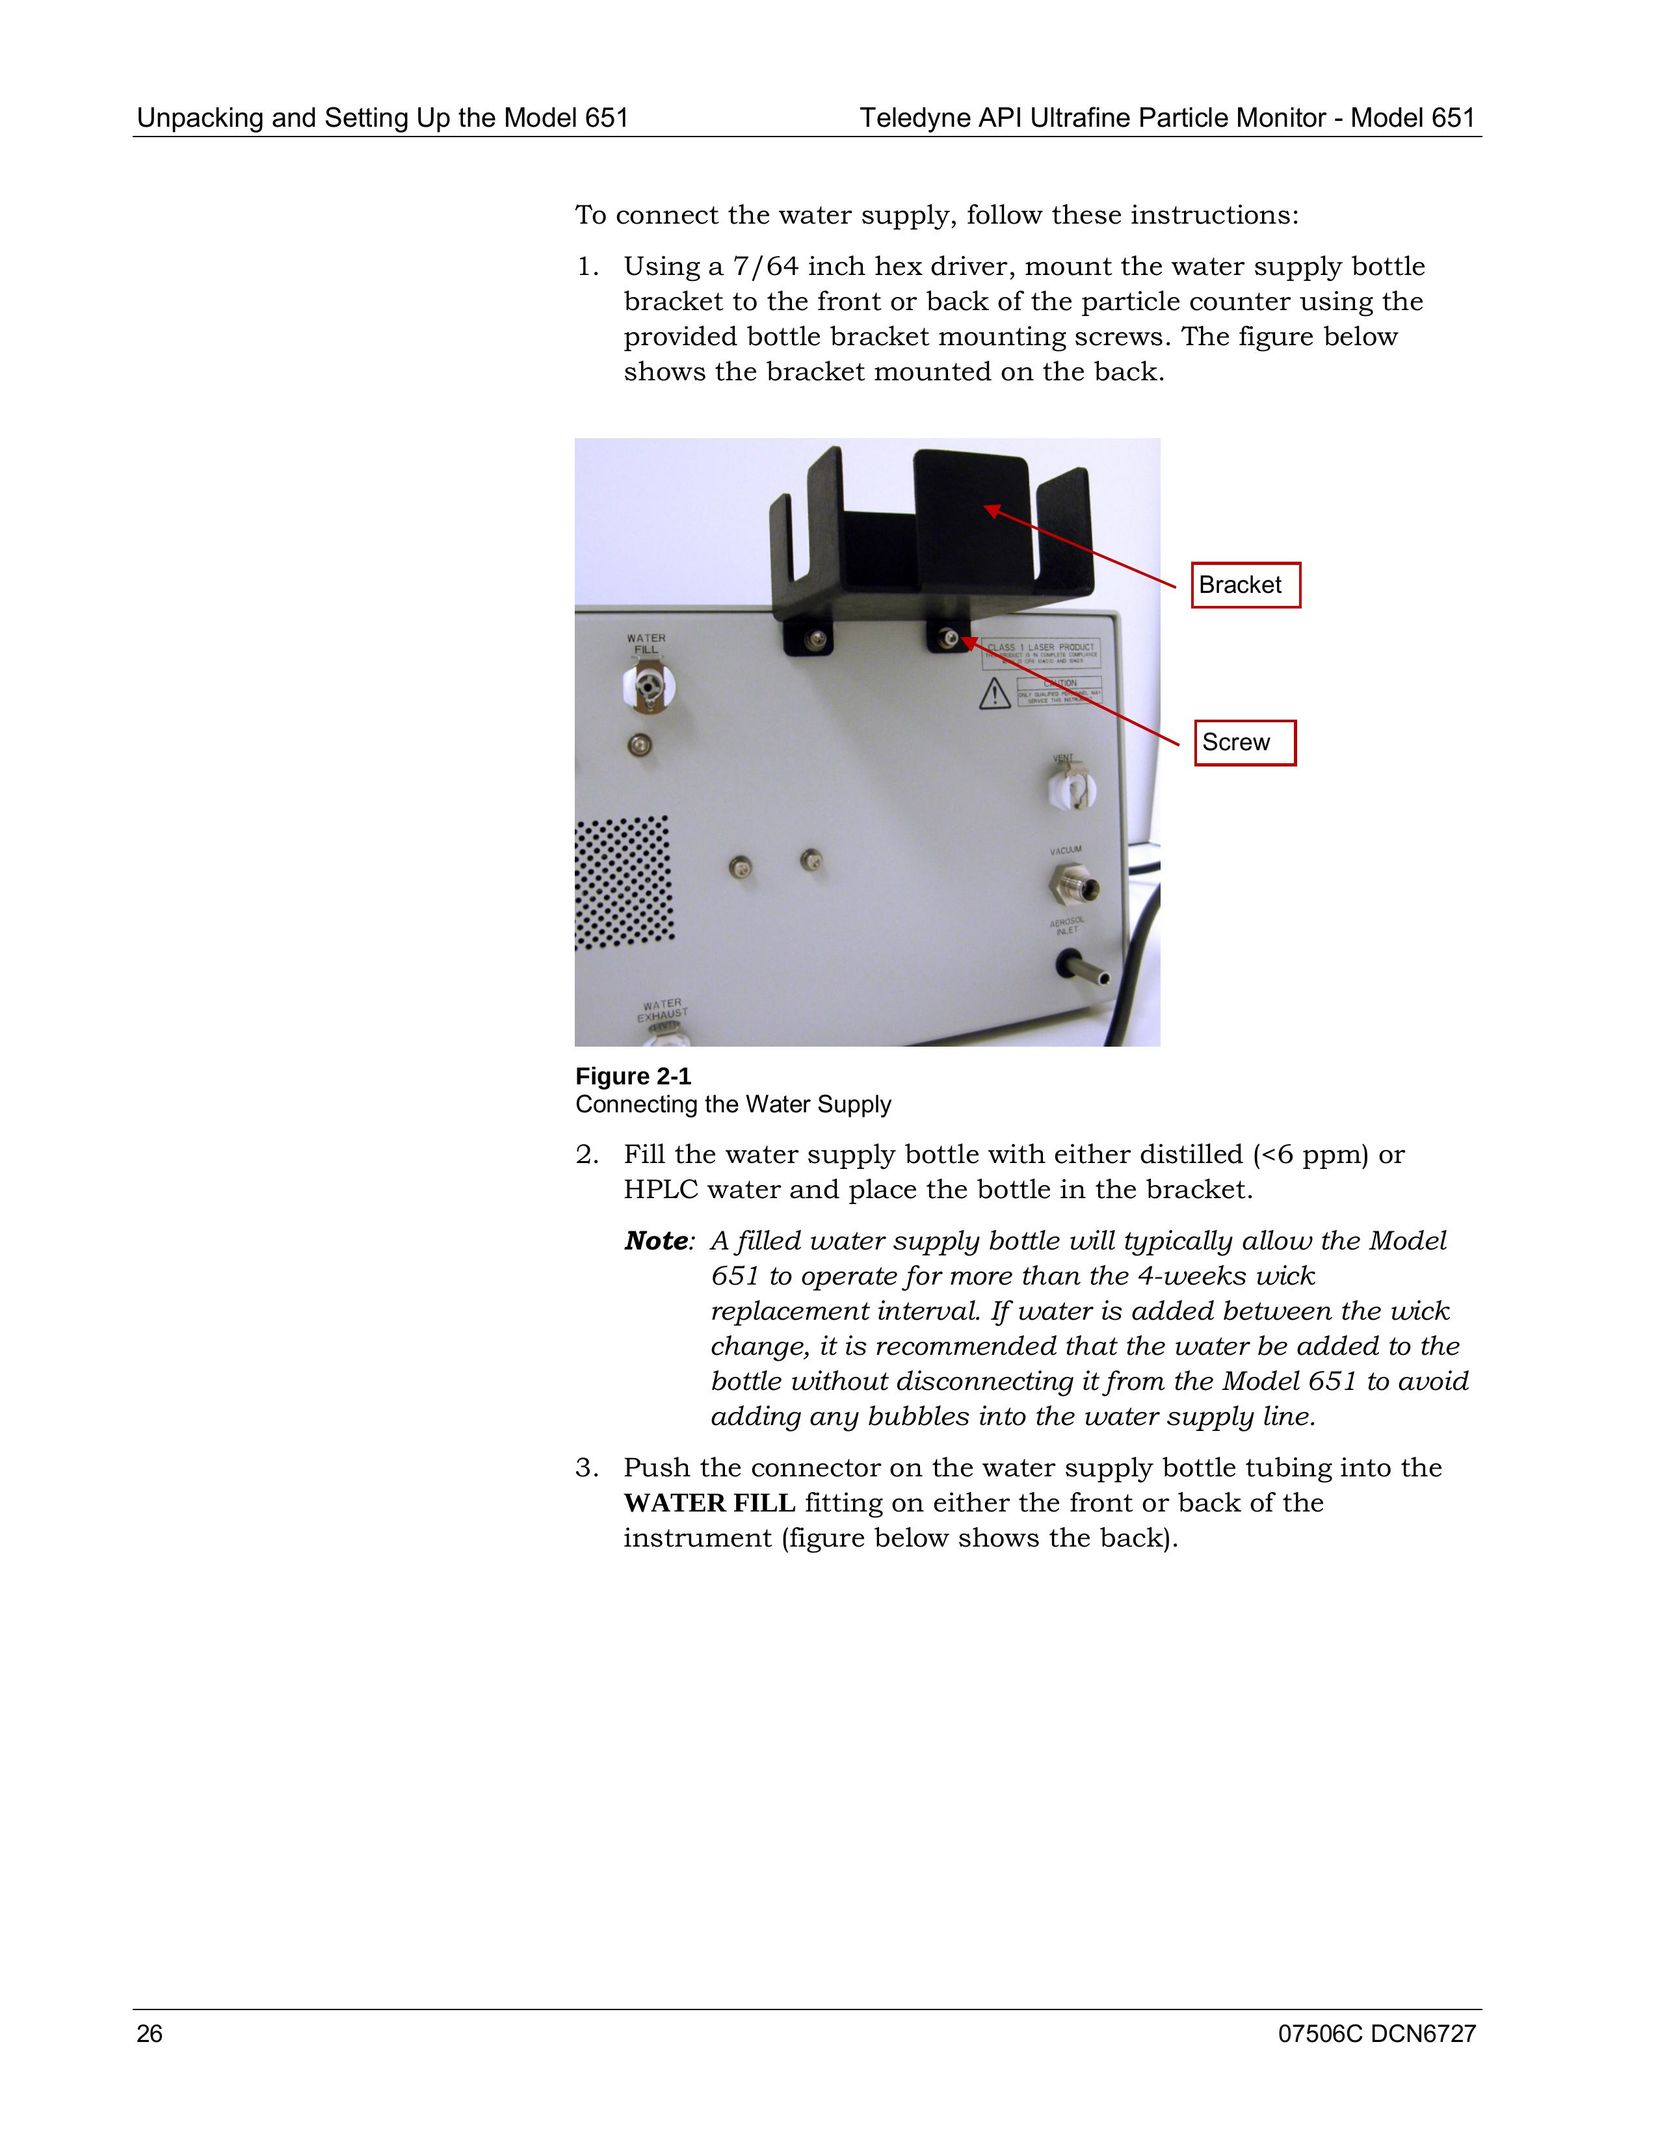 Teledyne 651 Computer Monitor User Manual (Page 28)